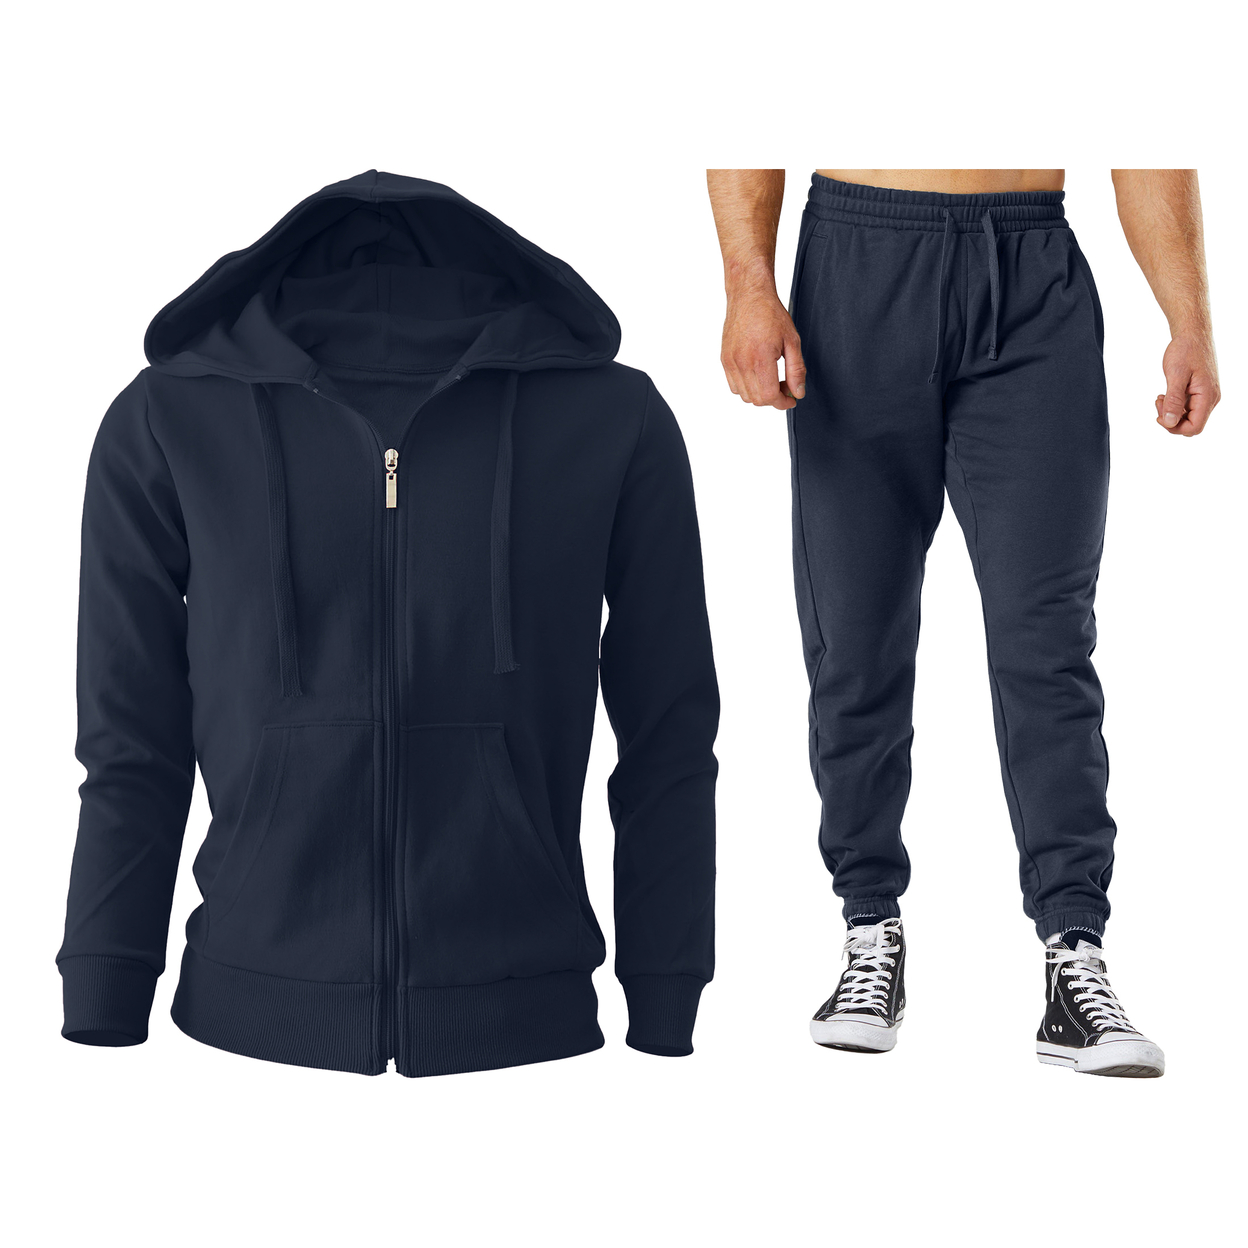 4-Piece: Men's Winter Warm Cozy Athletic Multi-Pockets BIG & TALL Sweatsuit Set - Grey, 3xl